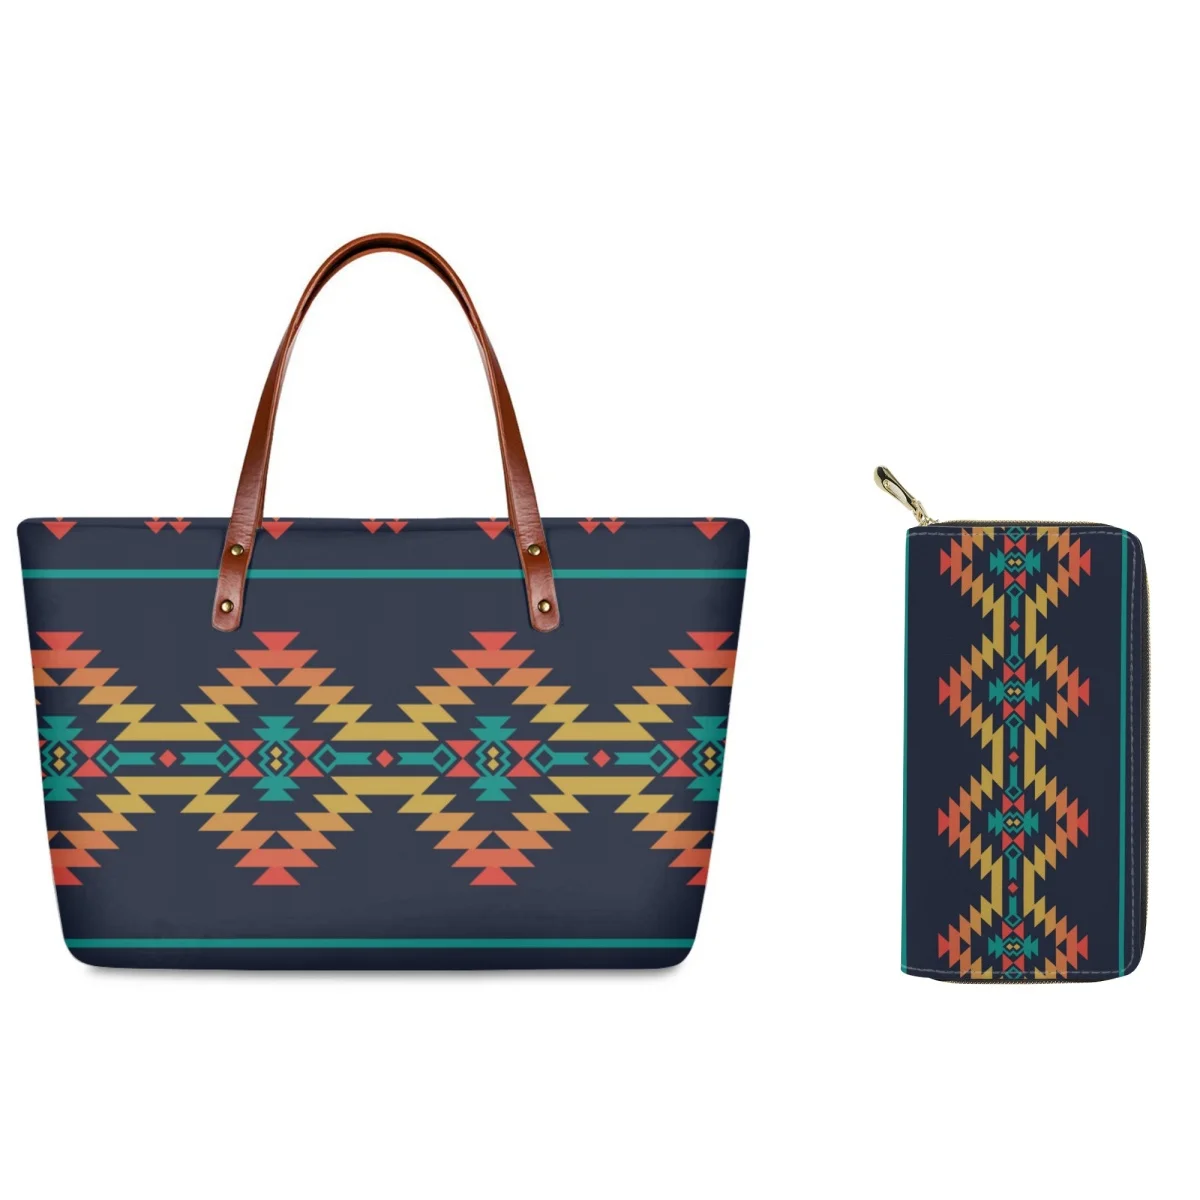 

FORUDESIGNS 2Pcs/Set Tote Bags Leather Purses Aztec Tribal Art Fabric Print Ladies Hand Bag American Patterns Women's Handbags